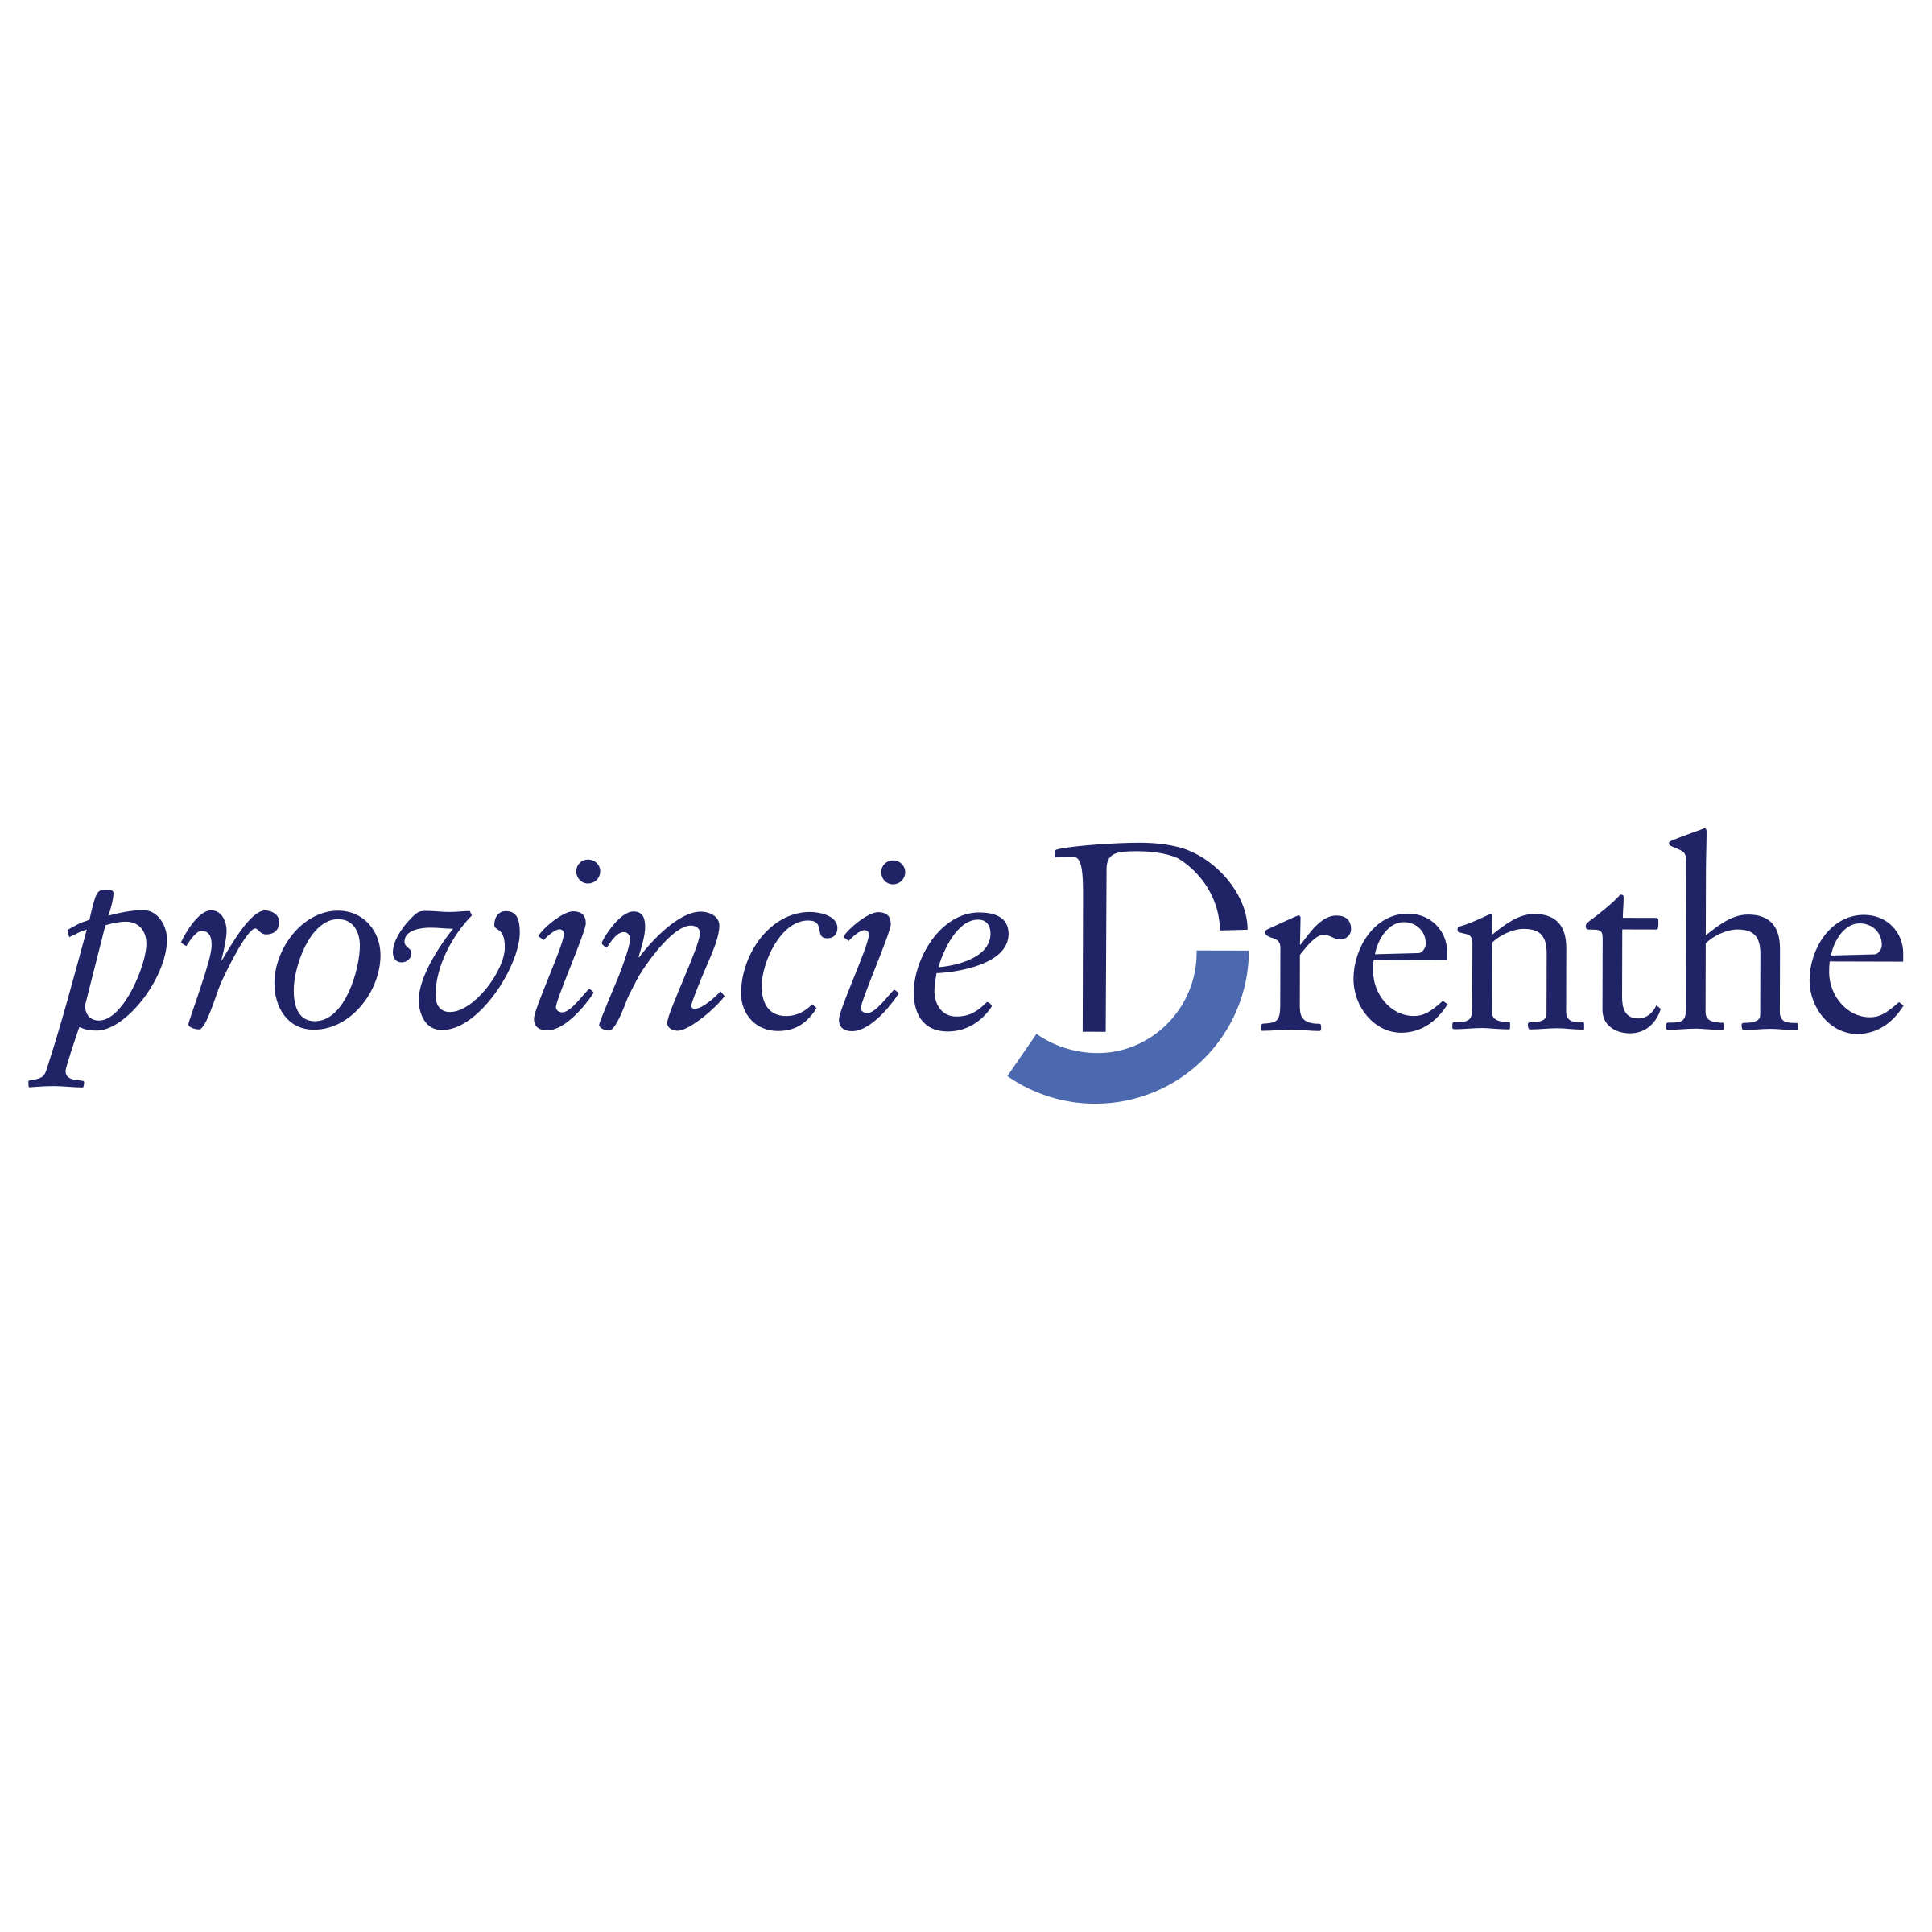 provincie-drenthe-logo-png-transparent.png